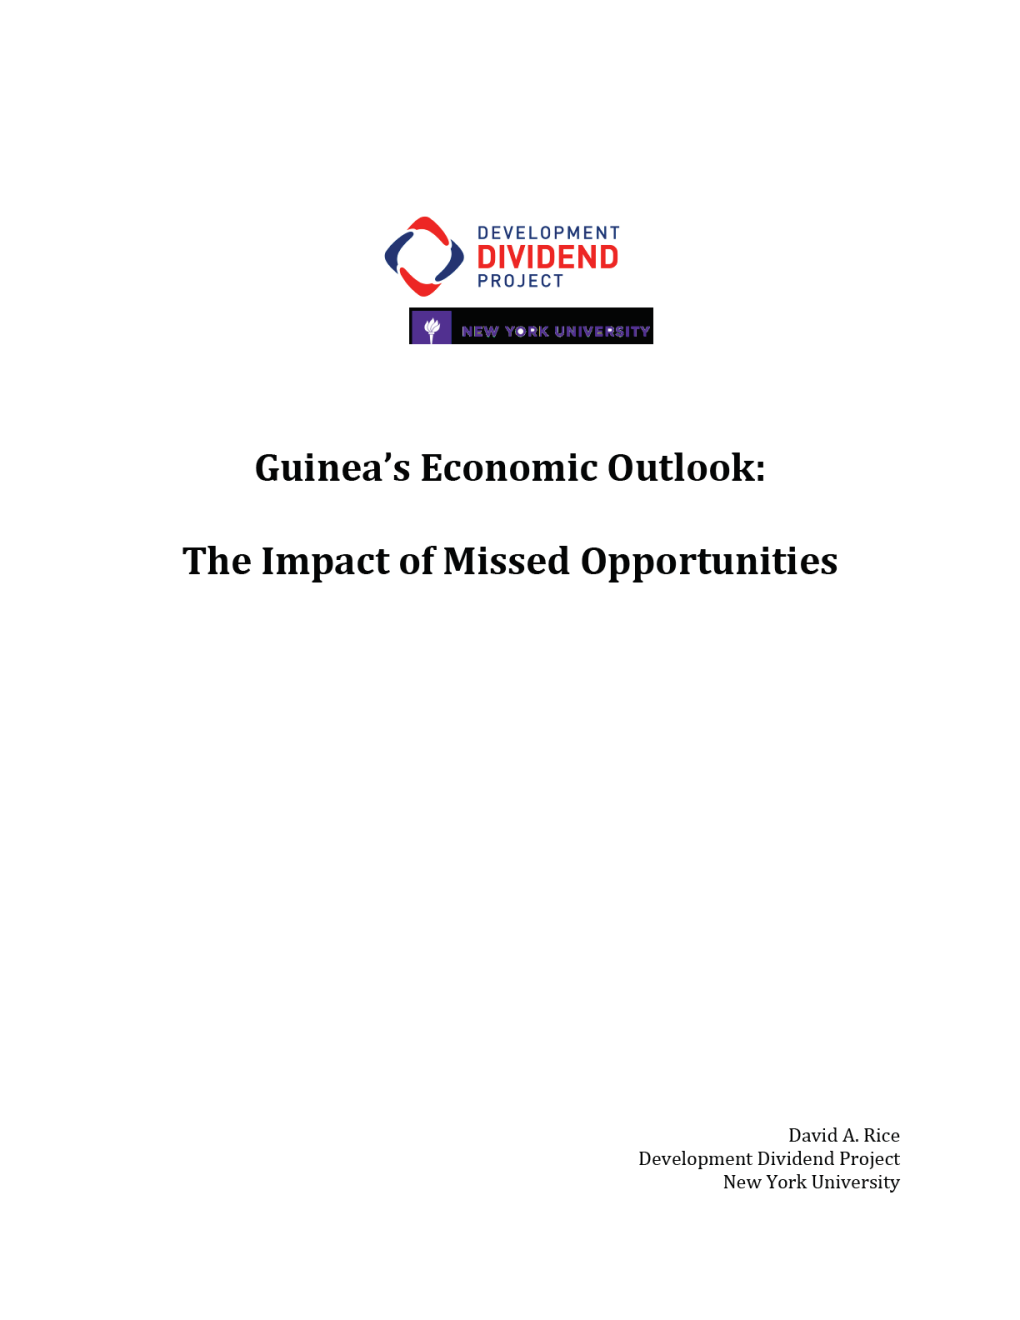 EN-Guineas-Economic-Outlook-2.Pdf